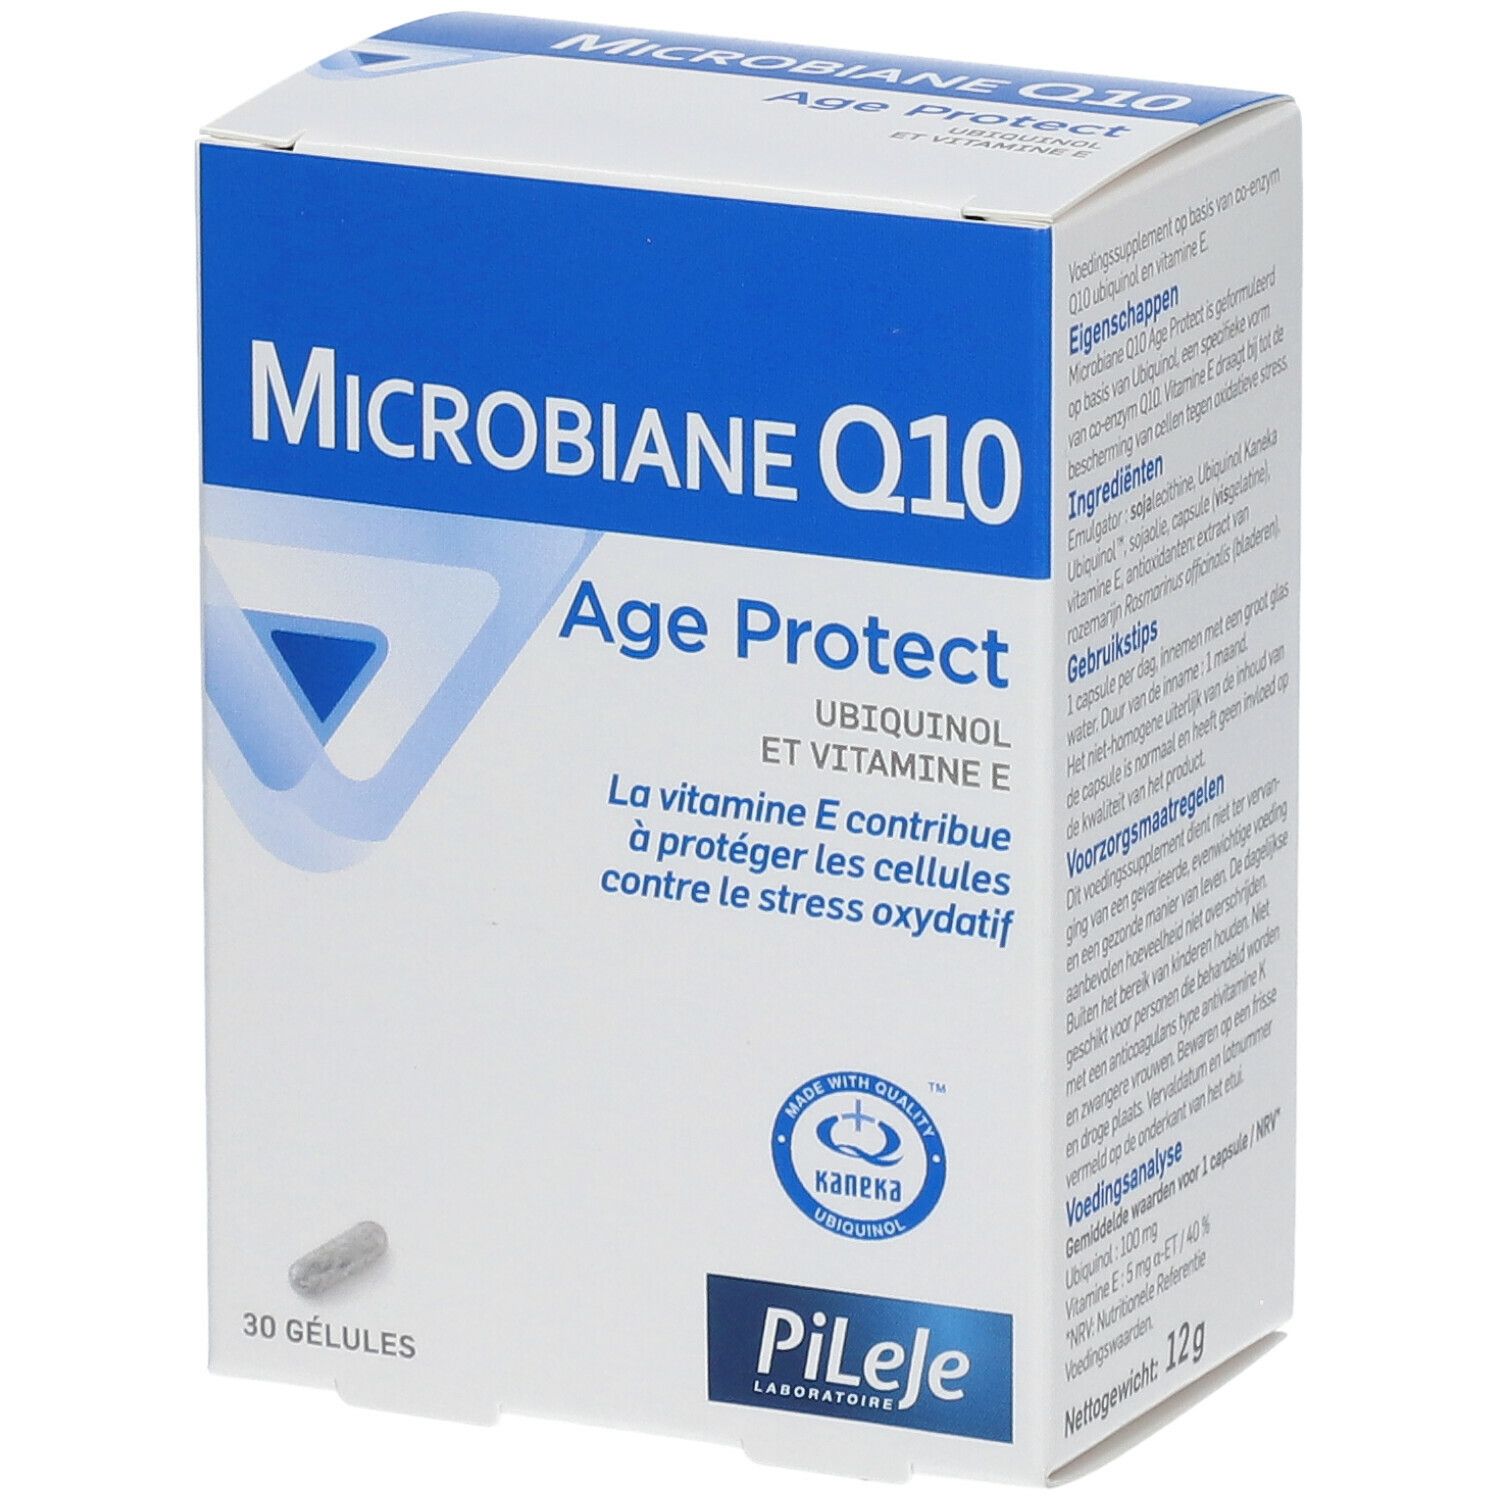 Microbiane Q10 Age Protect